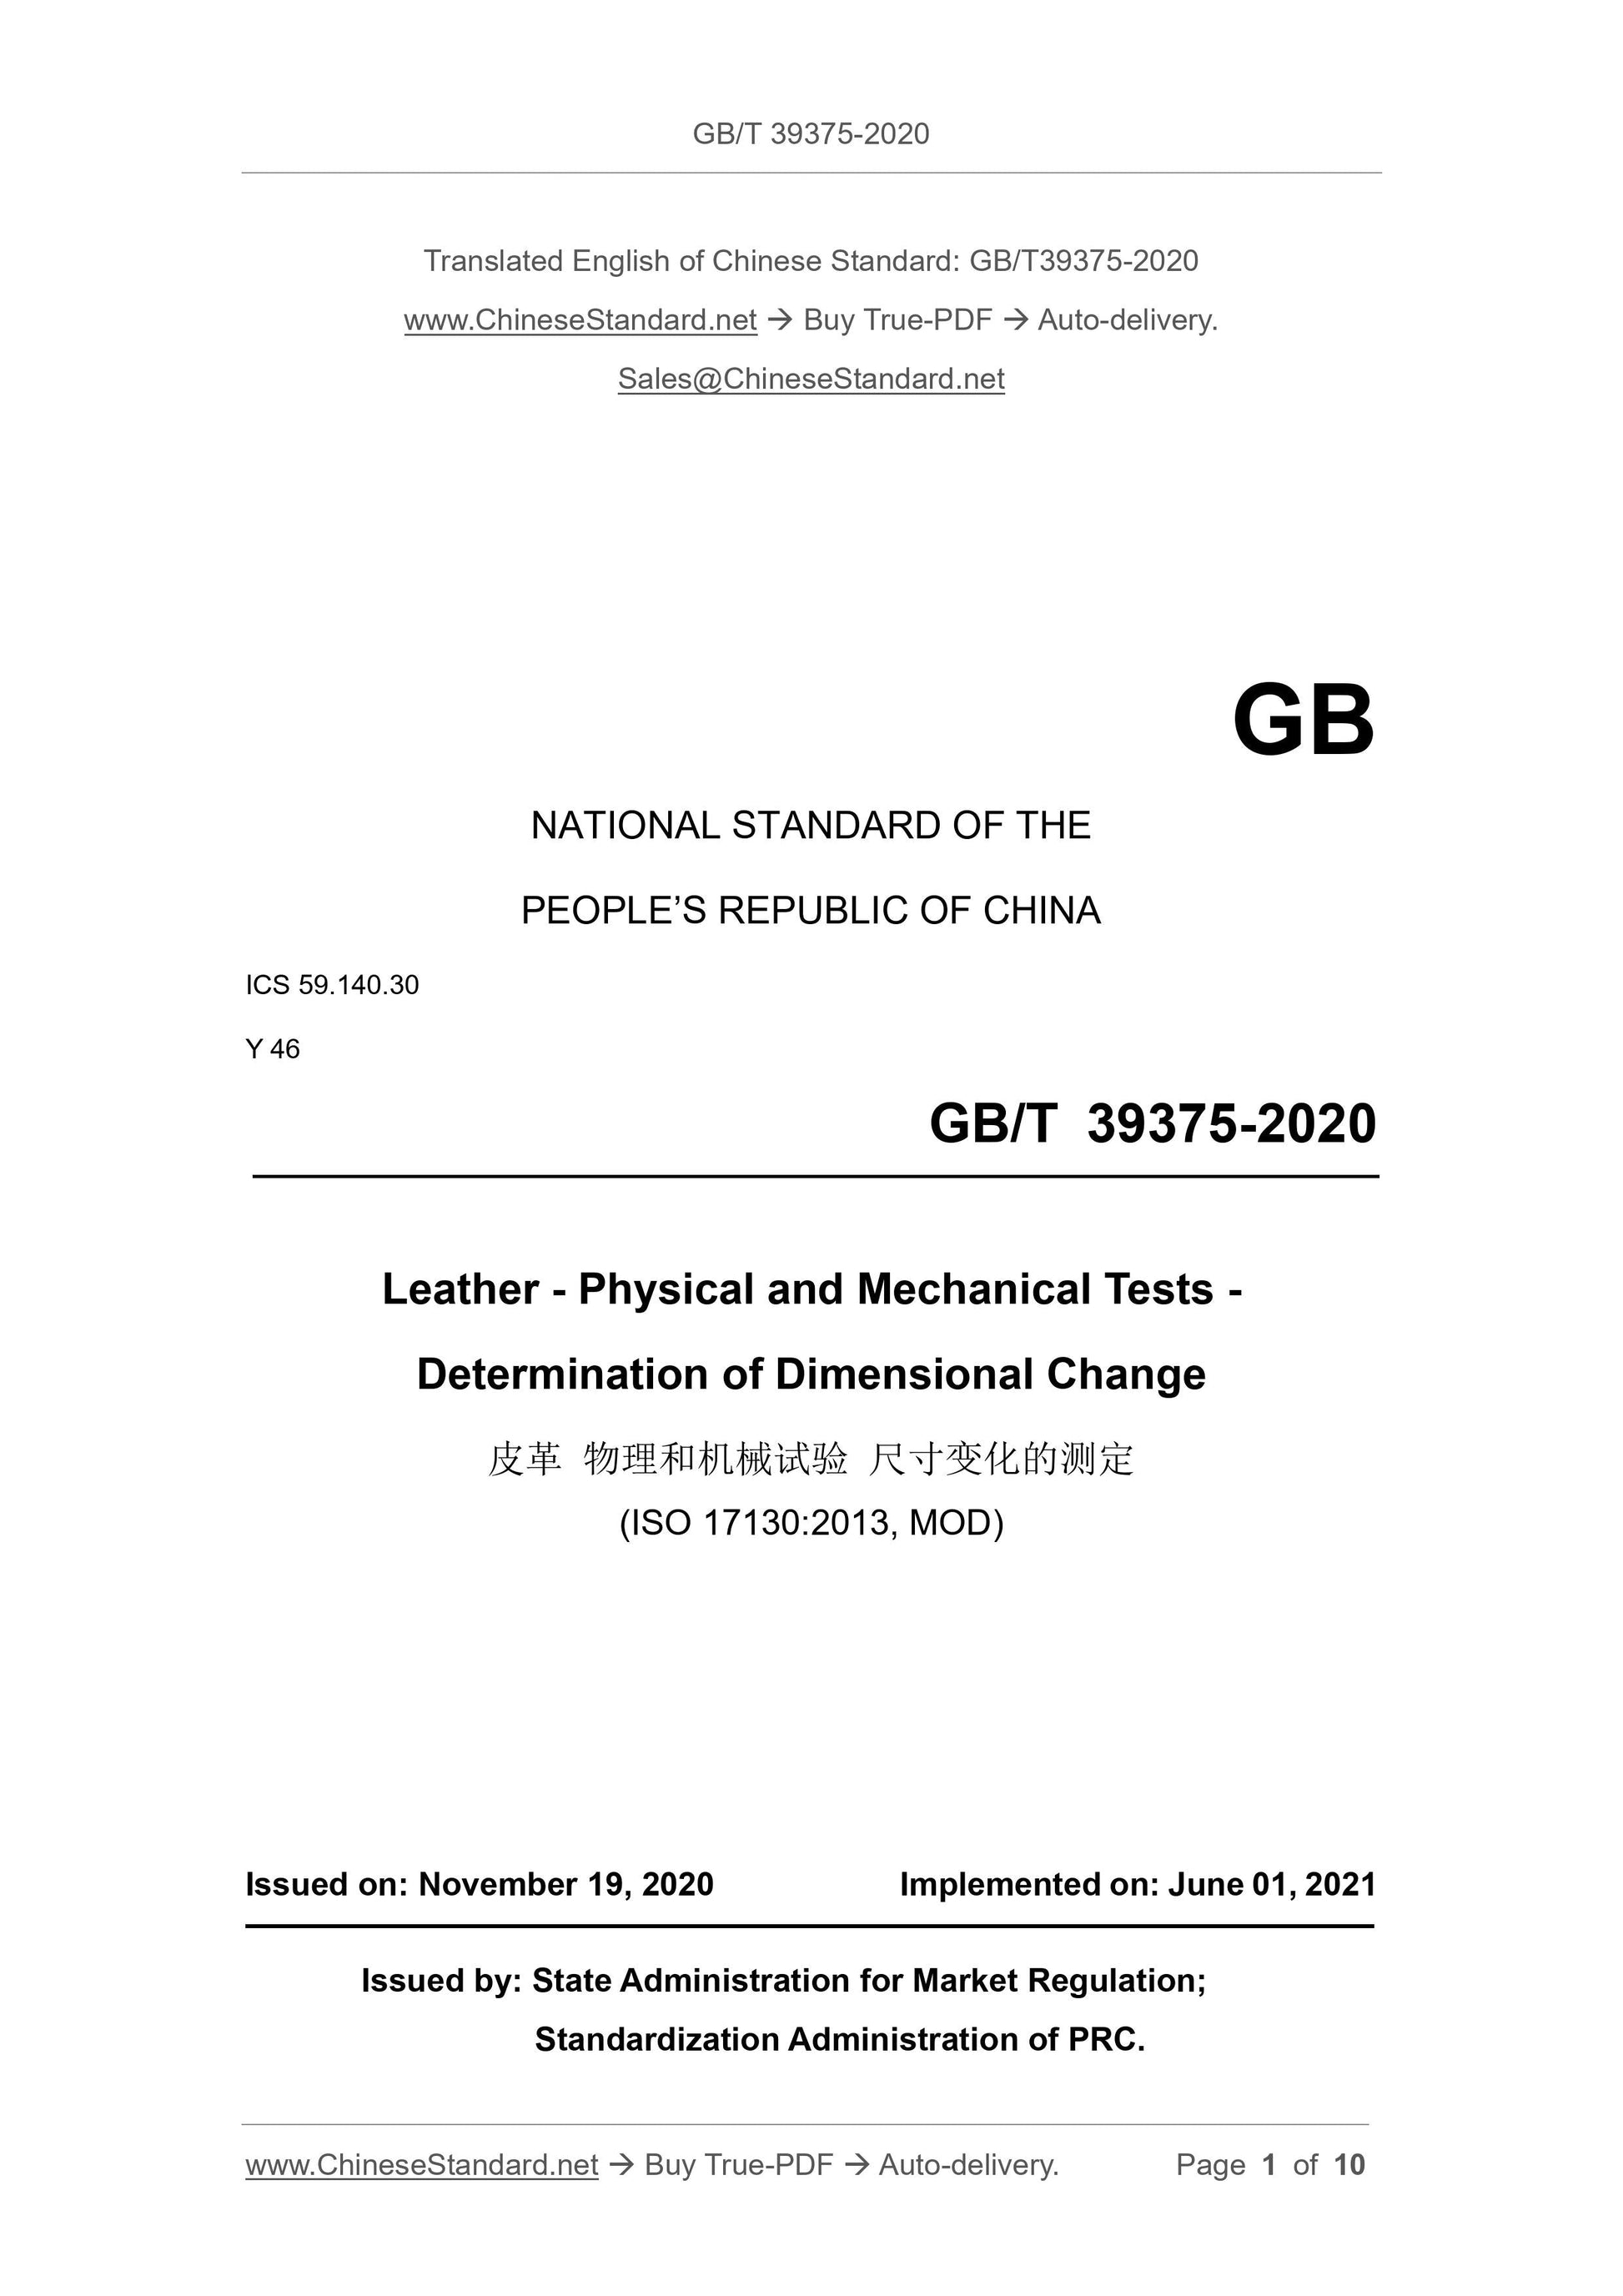 GBT39375-2020 Page 1